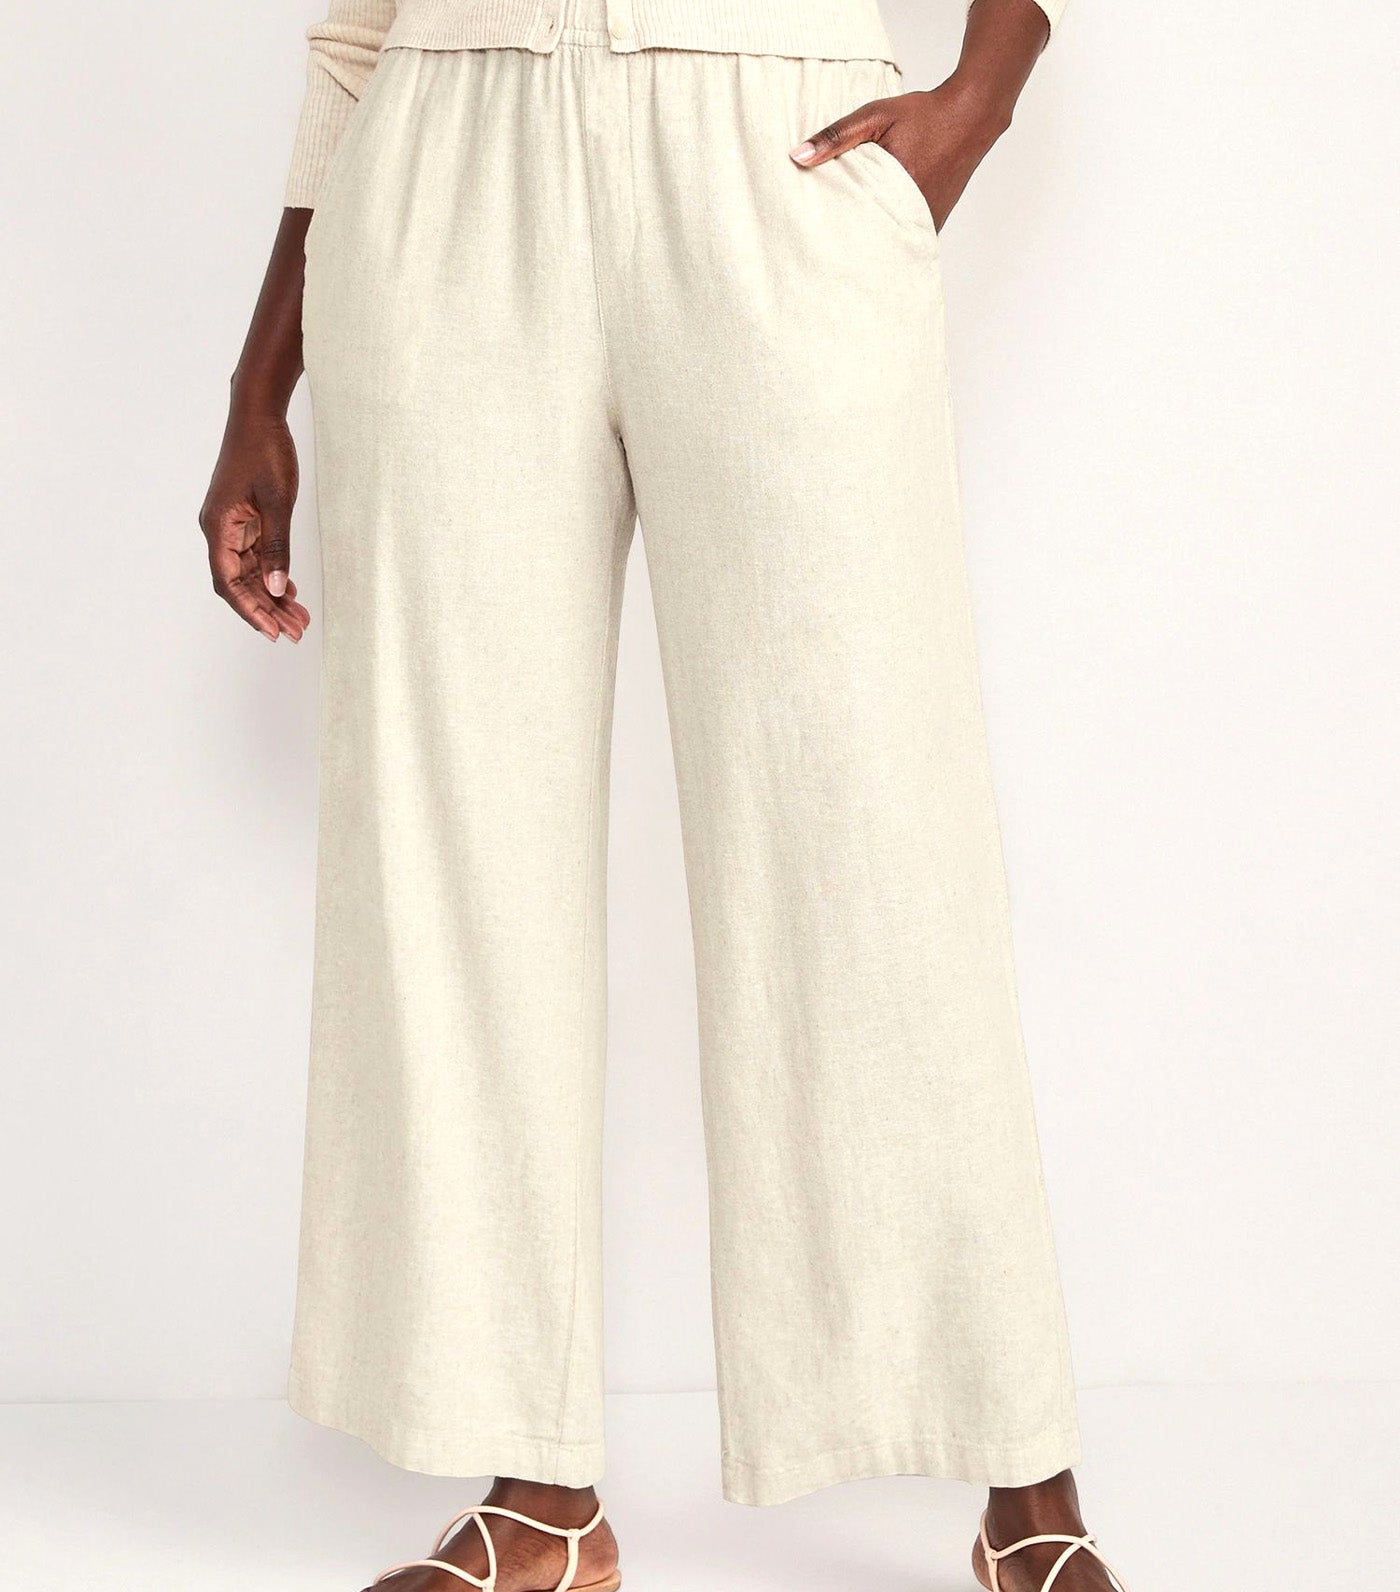 Linen Panties/linen Knickers for Women/linen Underwear/flax